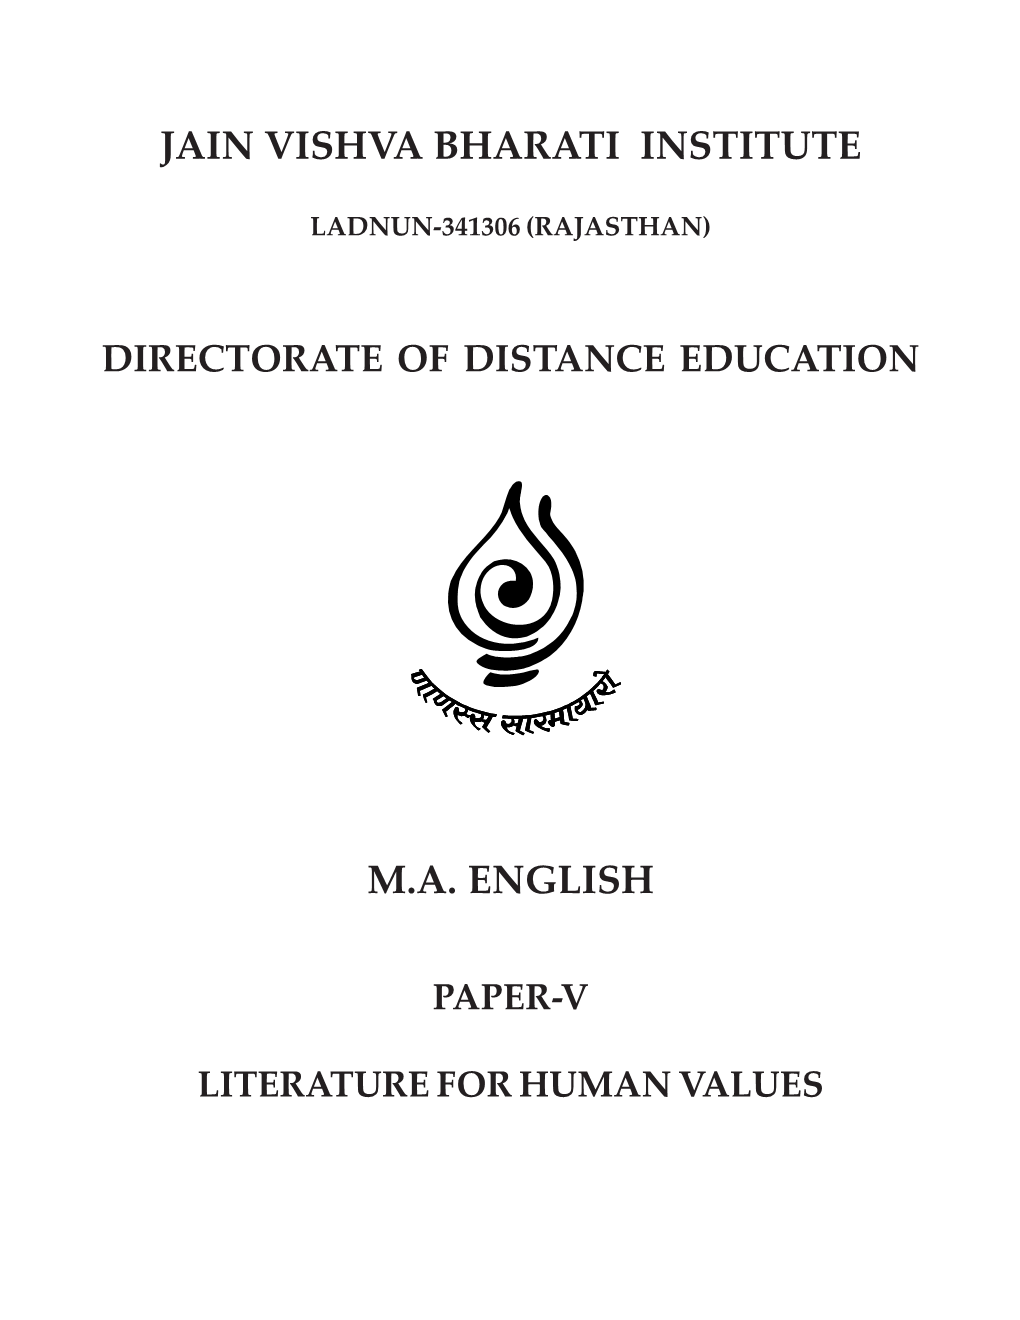 M.A. English Jain Vishva Bharati Institute